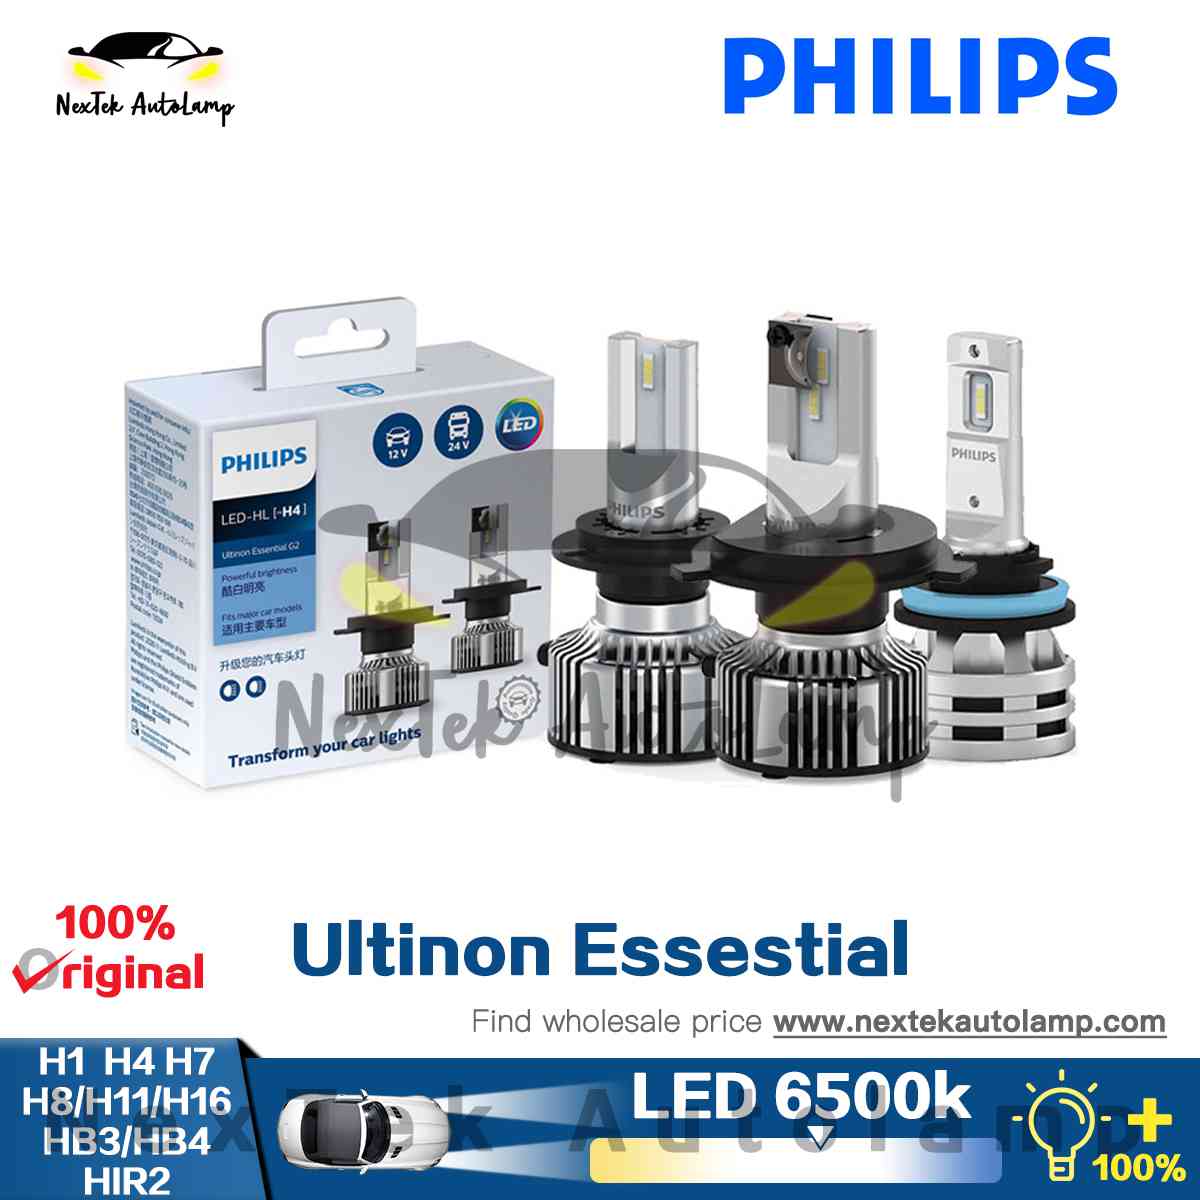 Philips Ultinon Essential LED Gen 2 H1 H4 H7 HB3 HB4 HIR2 H8 H9 H11 H16 Car  Headlight White 6500K 12V 24V Truck Integrated Driver